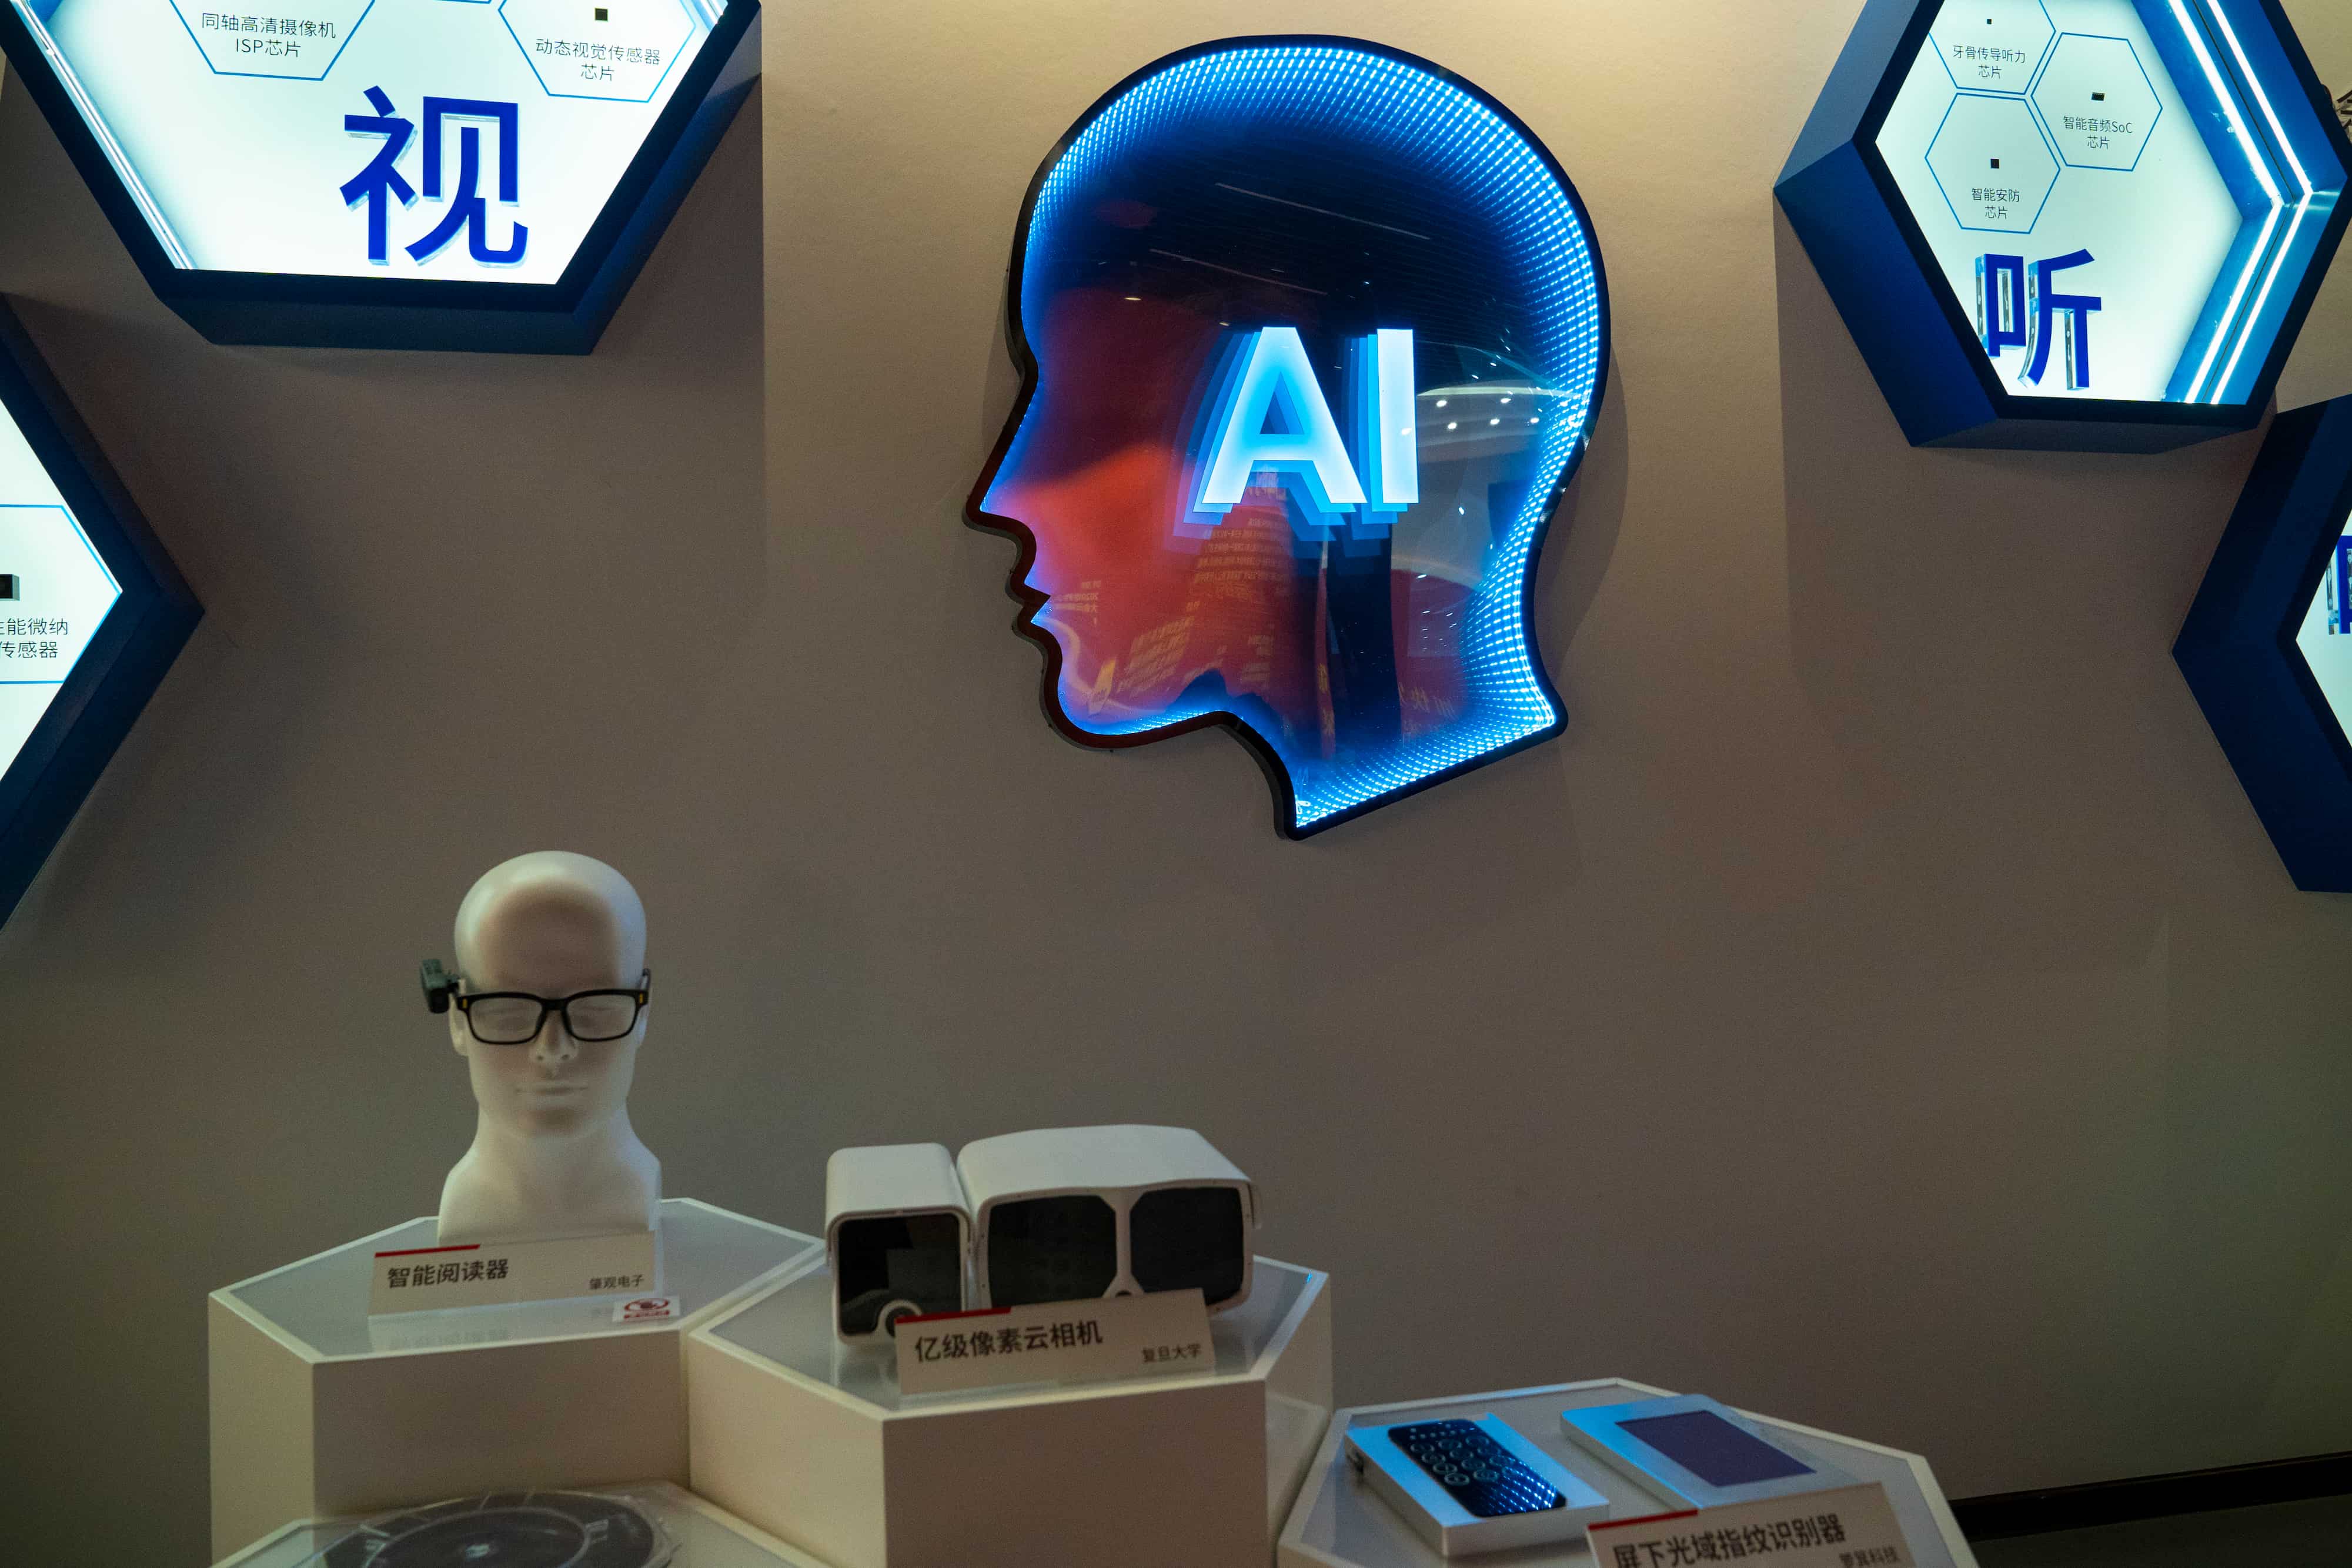 Microsoft: China's AI Will Disrupt US, SKorea, India Elections